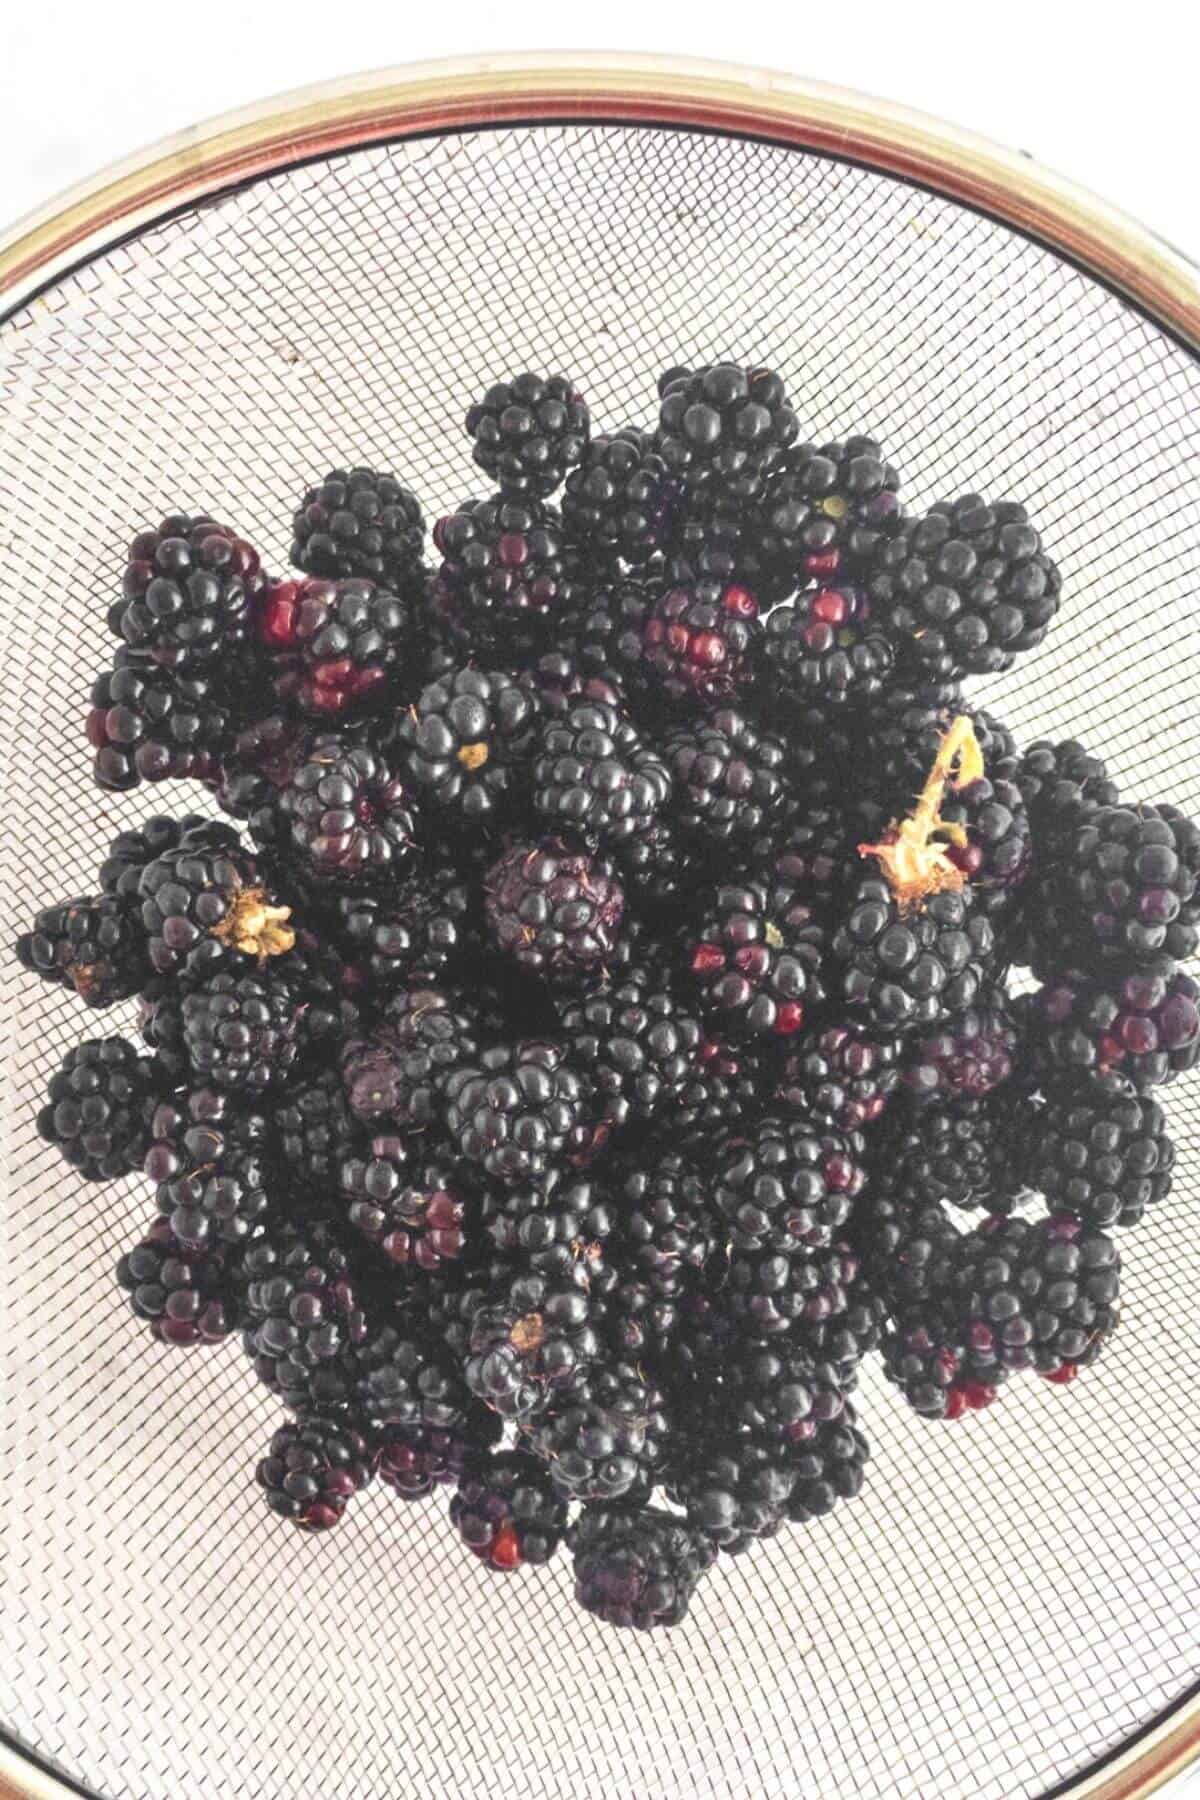 Blackberries are draining in a sieve.